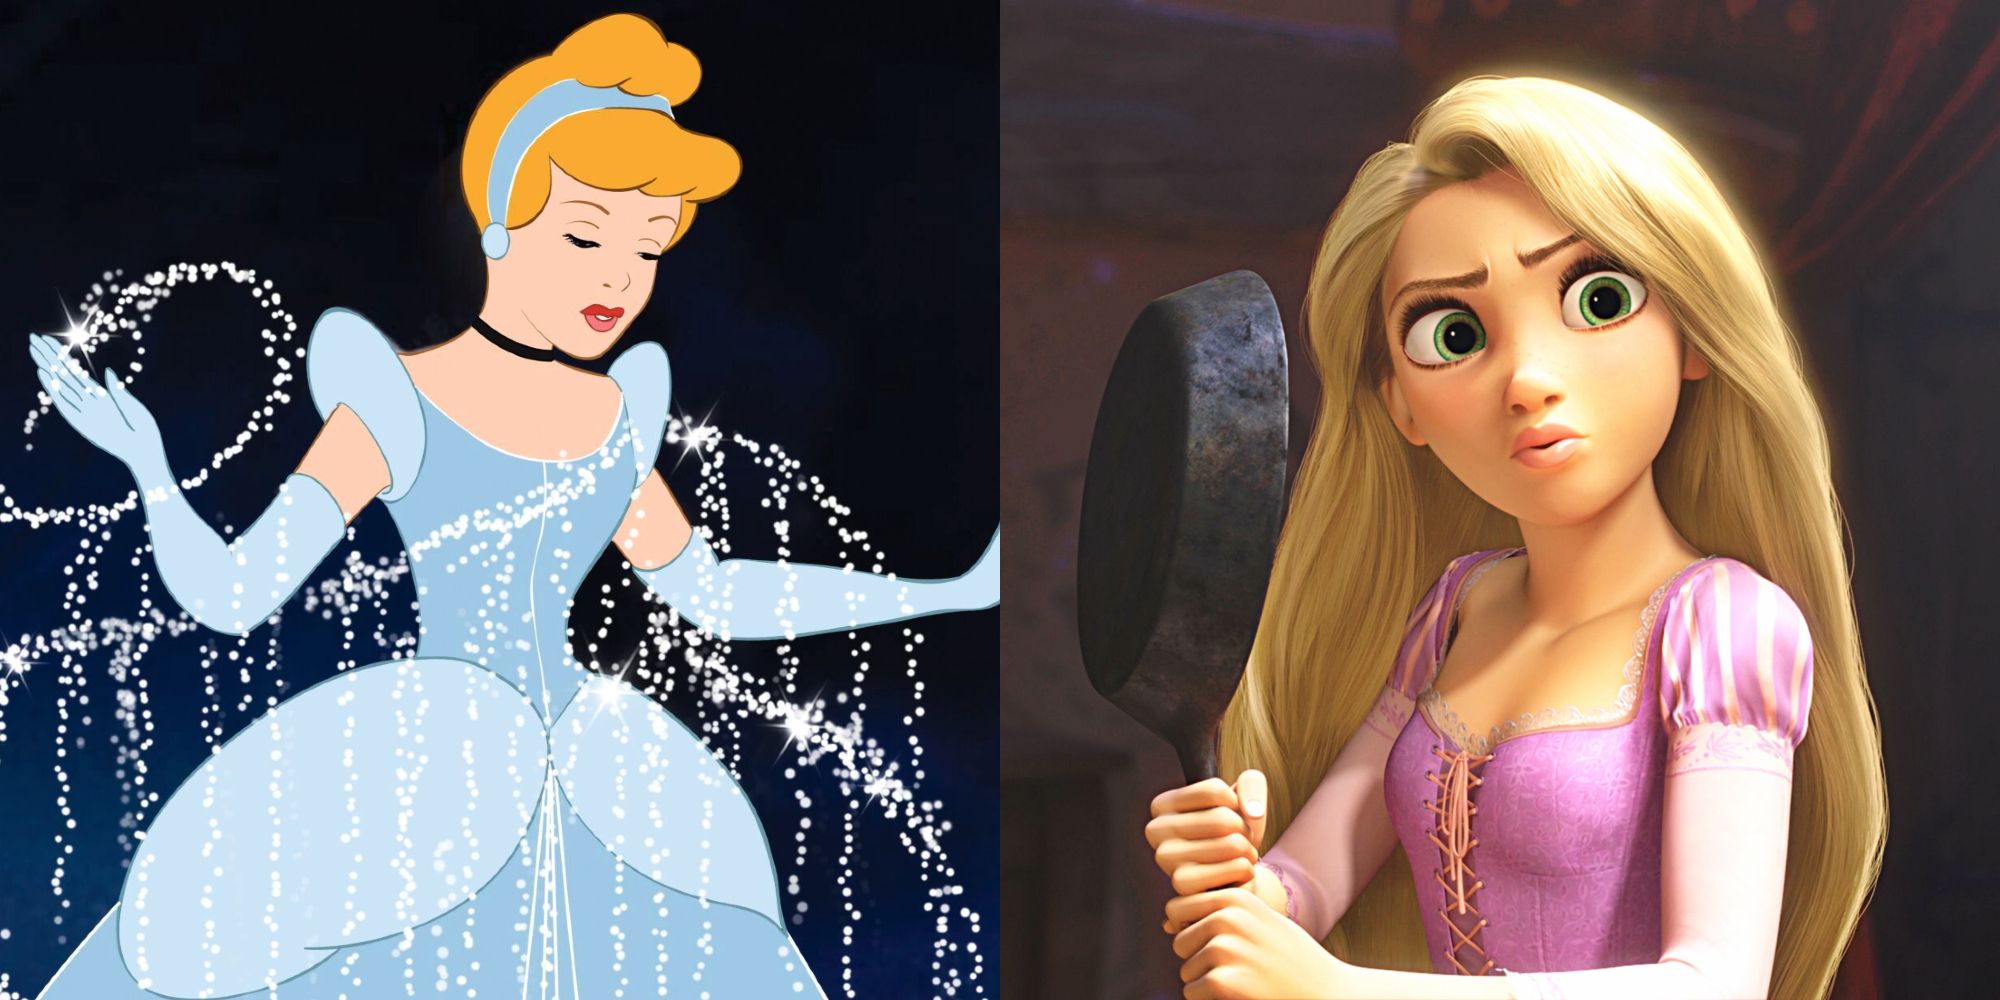 Split image: Cinderella is enhanted into her gown, Rapunzel wielding a frying pan